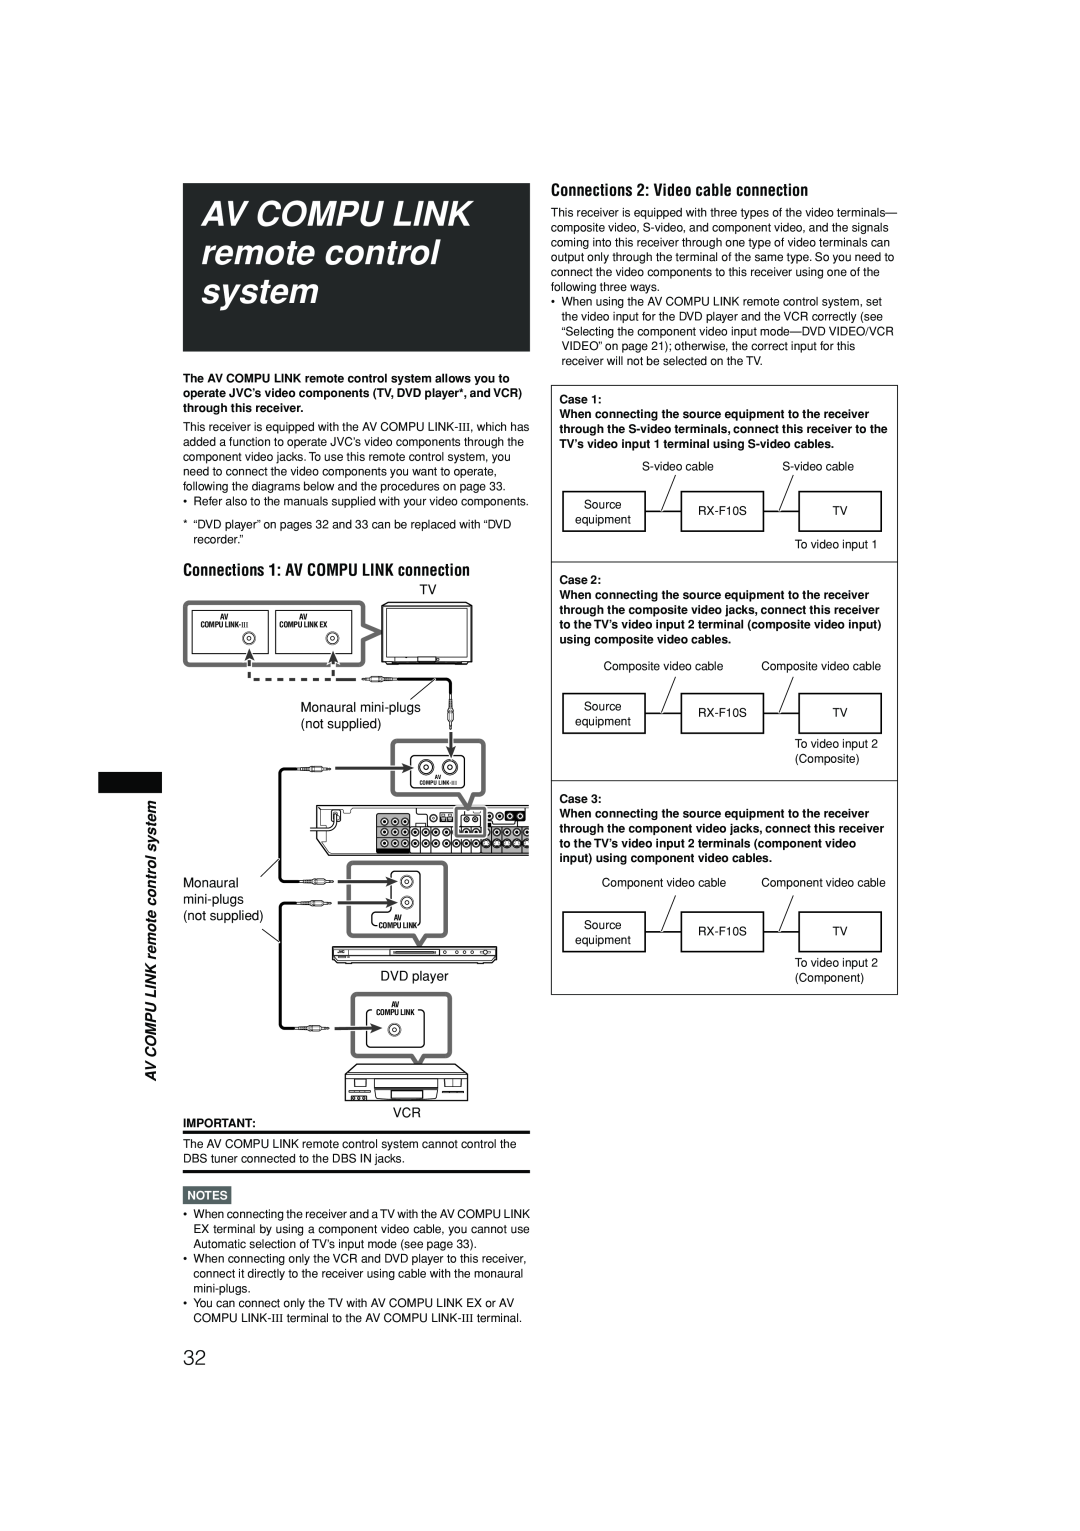 JVC RX-F10S manual AV COMPU LINK remote control system, Connections 1: AV COMPU LINK connection, Notes 